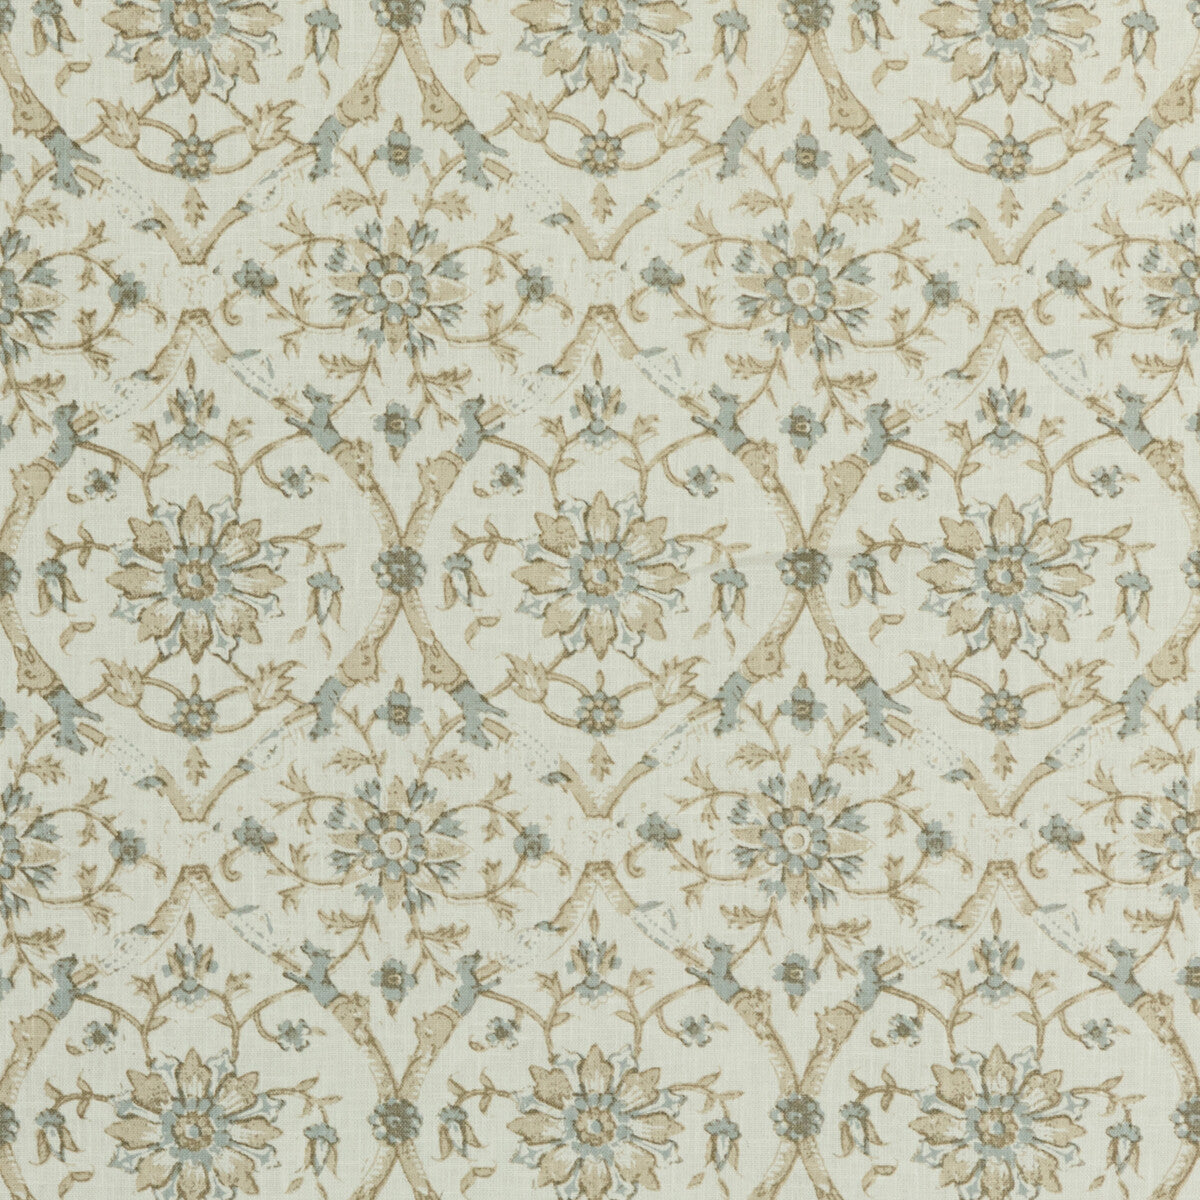 Kravet Basics fabric in rani-1611 color - pattern RANI.1611.0 - by Kravet Basics in the L&